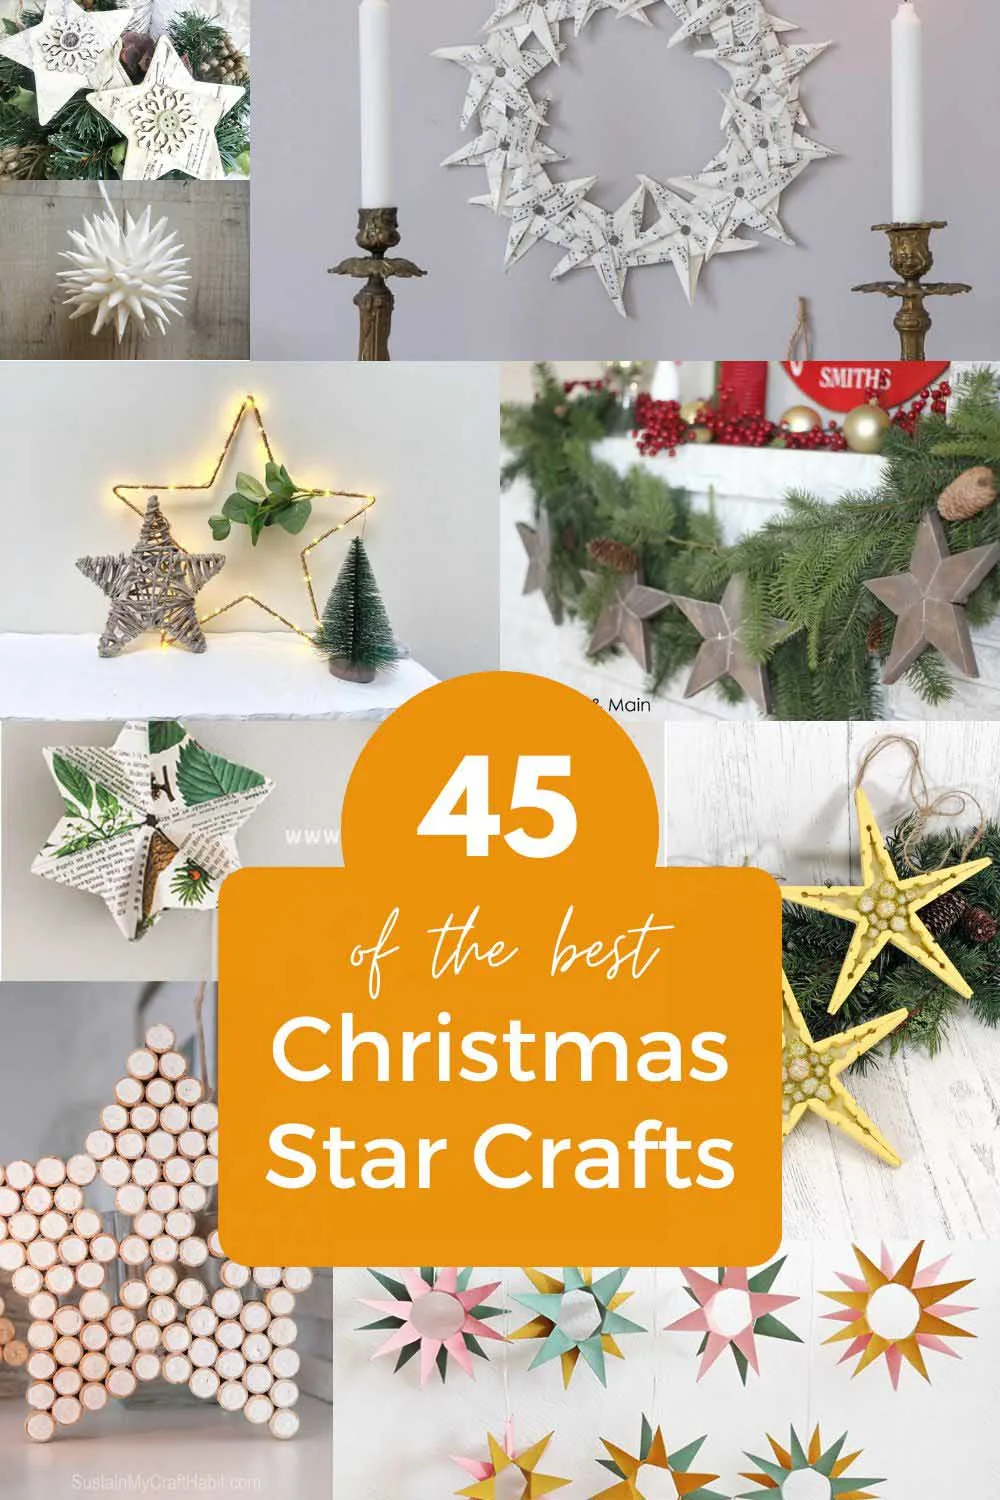 51 Stunning DIY Outdoor Christmas Decorations  Wood christmas decorations,  Christmas decorations diy outdoor, Crafts